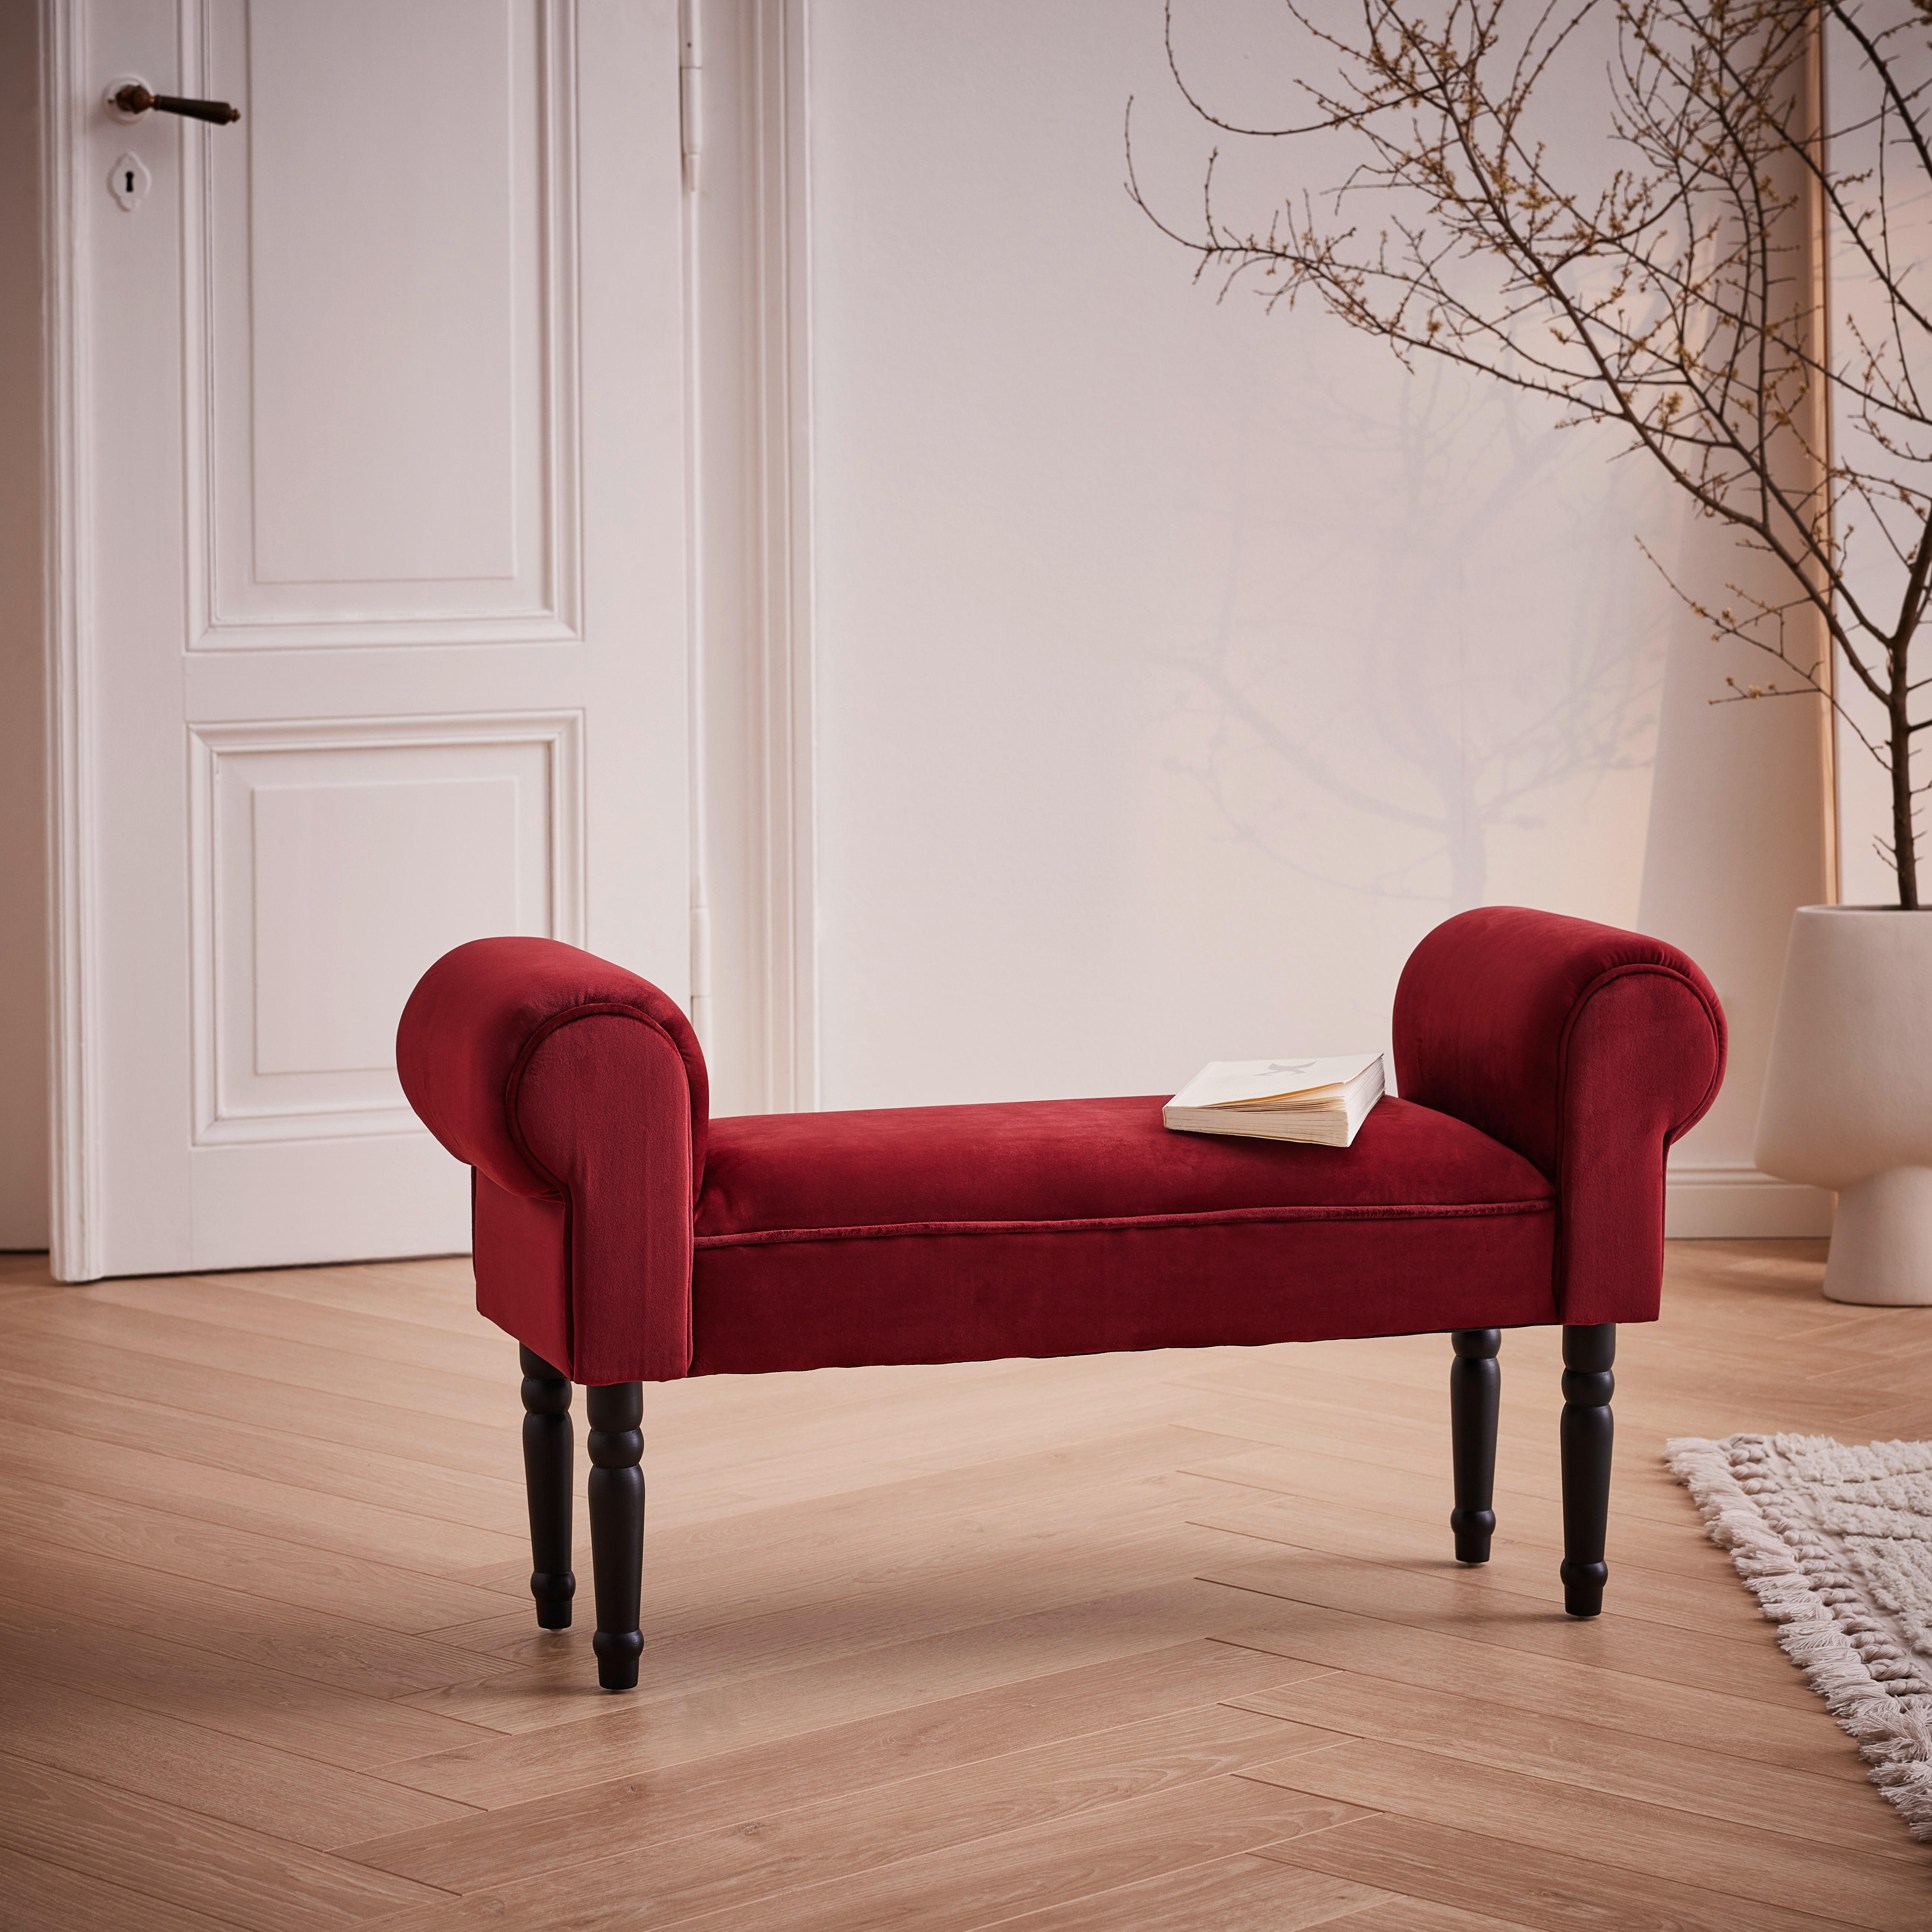 TABURET in lemn, textil negru, roșu burgund  - roșu burgund/negru, Trend, lemn/textil (100/54/30cm) - Xora